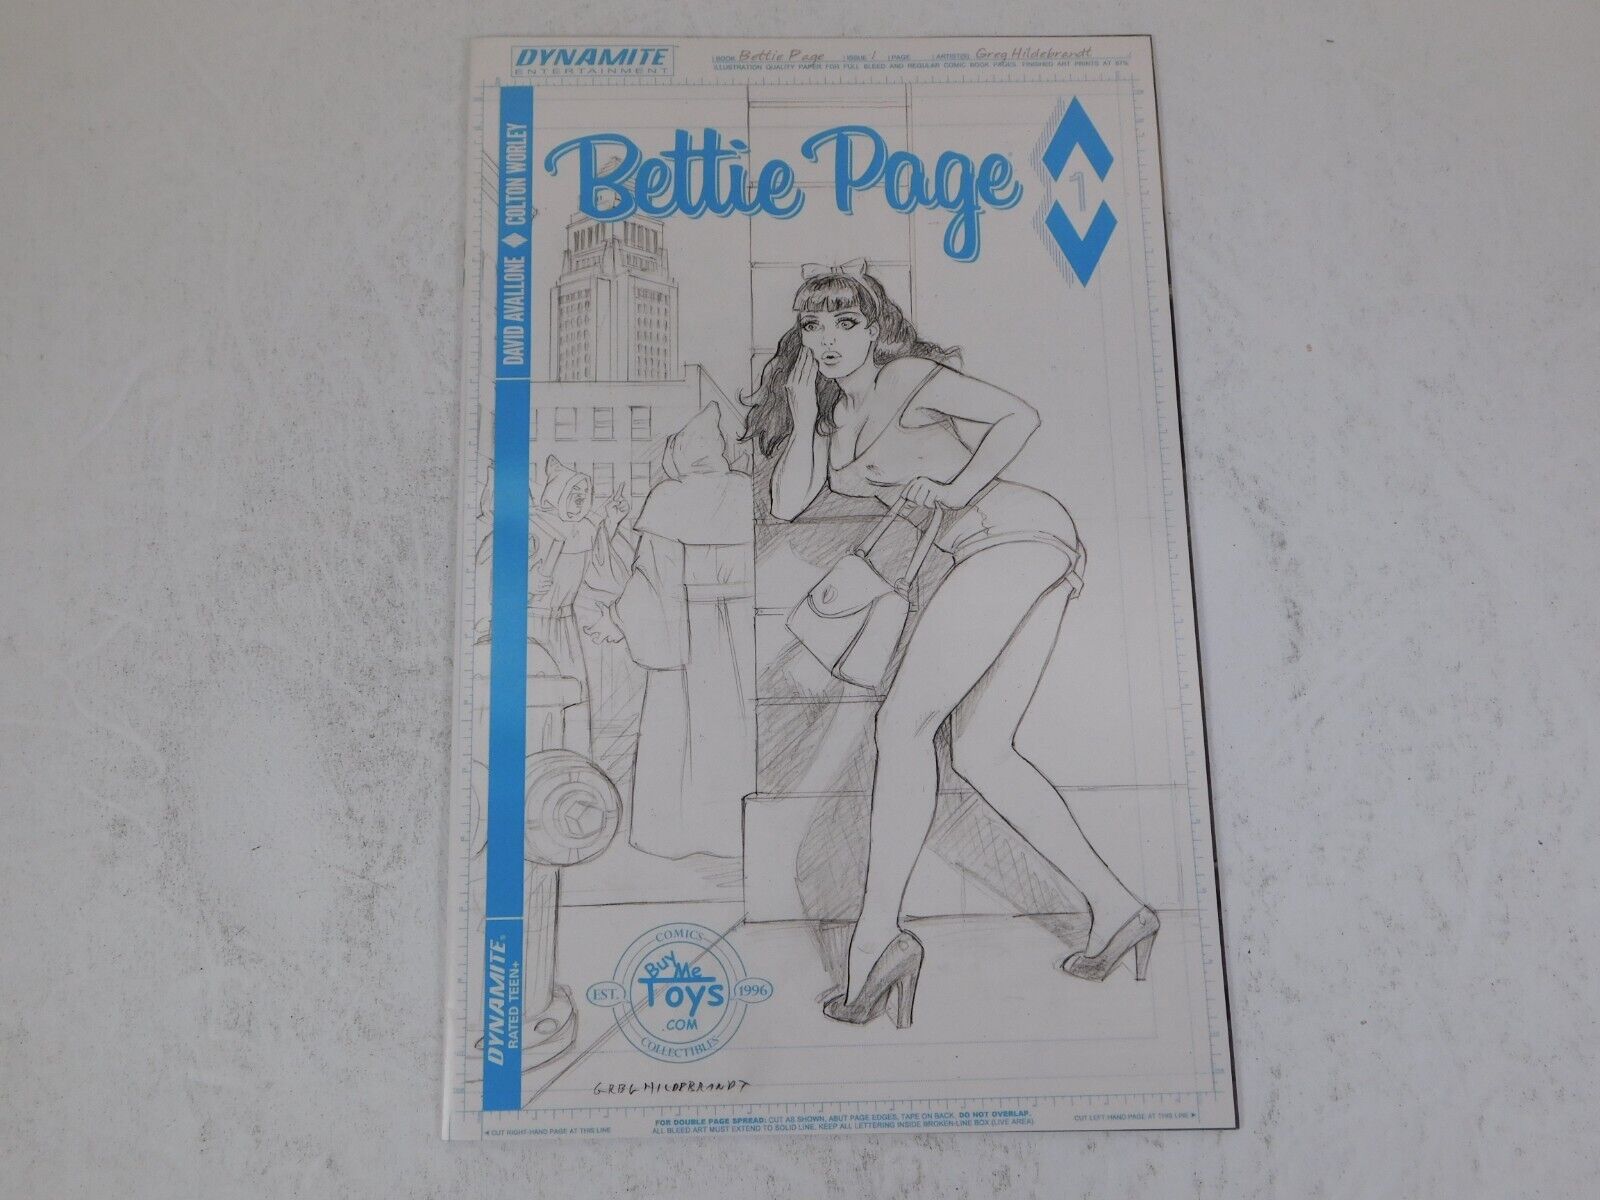 BETTIE PAGE #1 LIMITED EDITION GREG HILDEBRANDT B&W COVER- 400 Copy Print Run